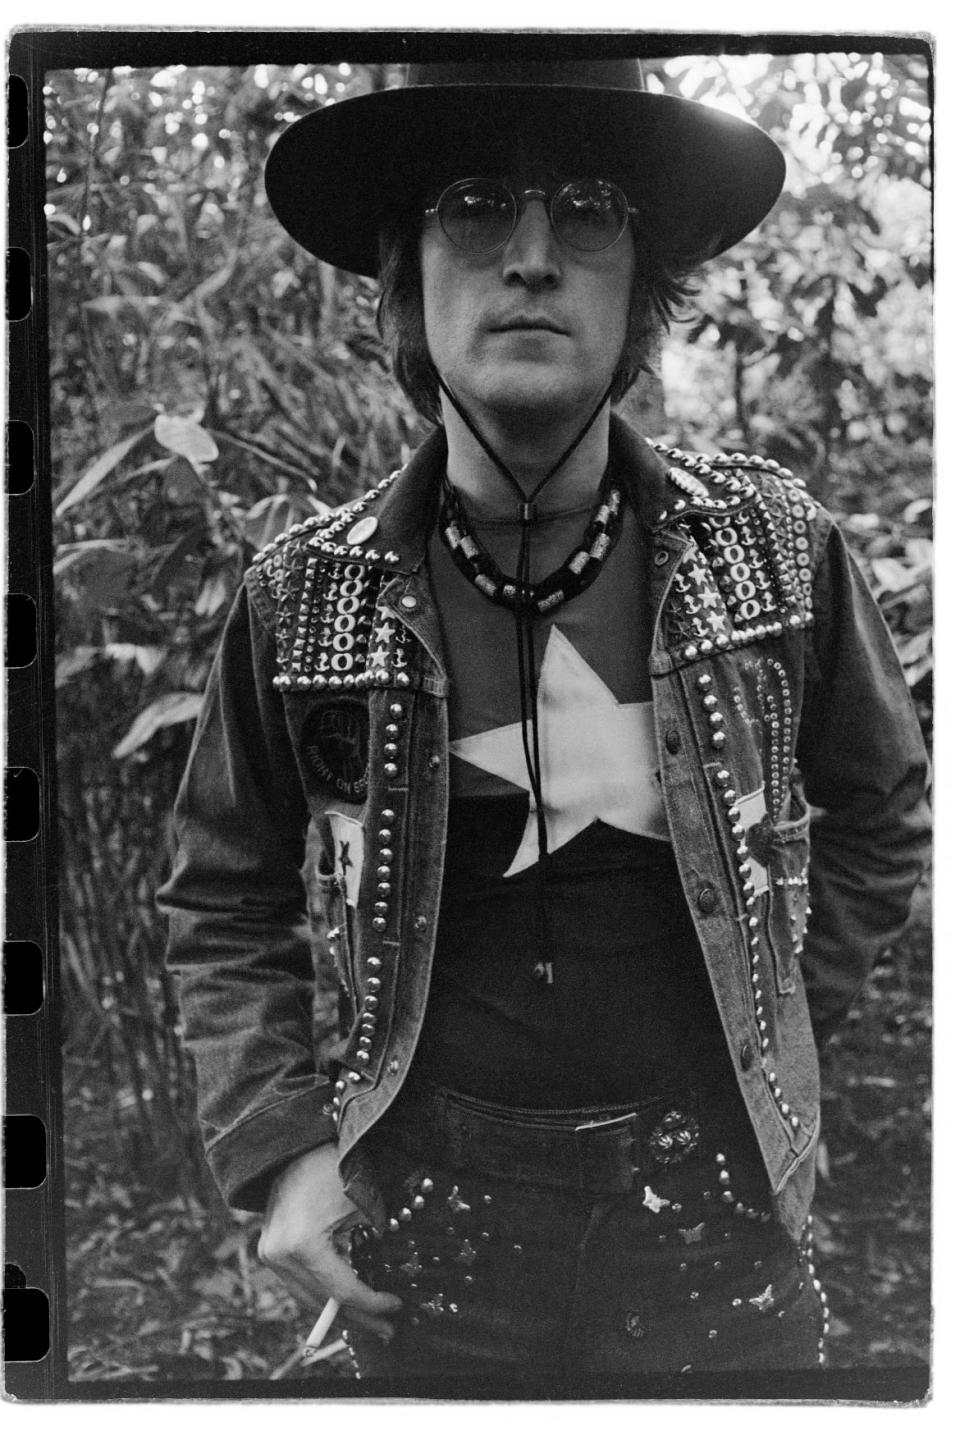 <div class="inline-image__caption"><p>John Lennon in the woods at Tittenhurst on July 22, 1971.</p></div> <div class="inline-image__credit">Peter Fordham © Yoko Ono Lennon</div>